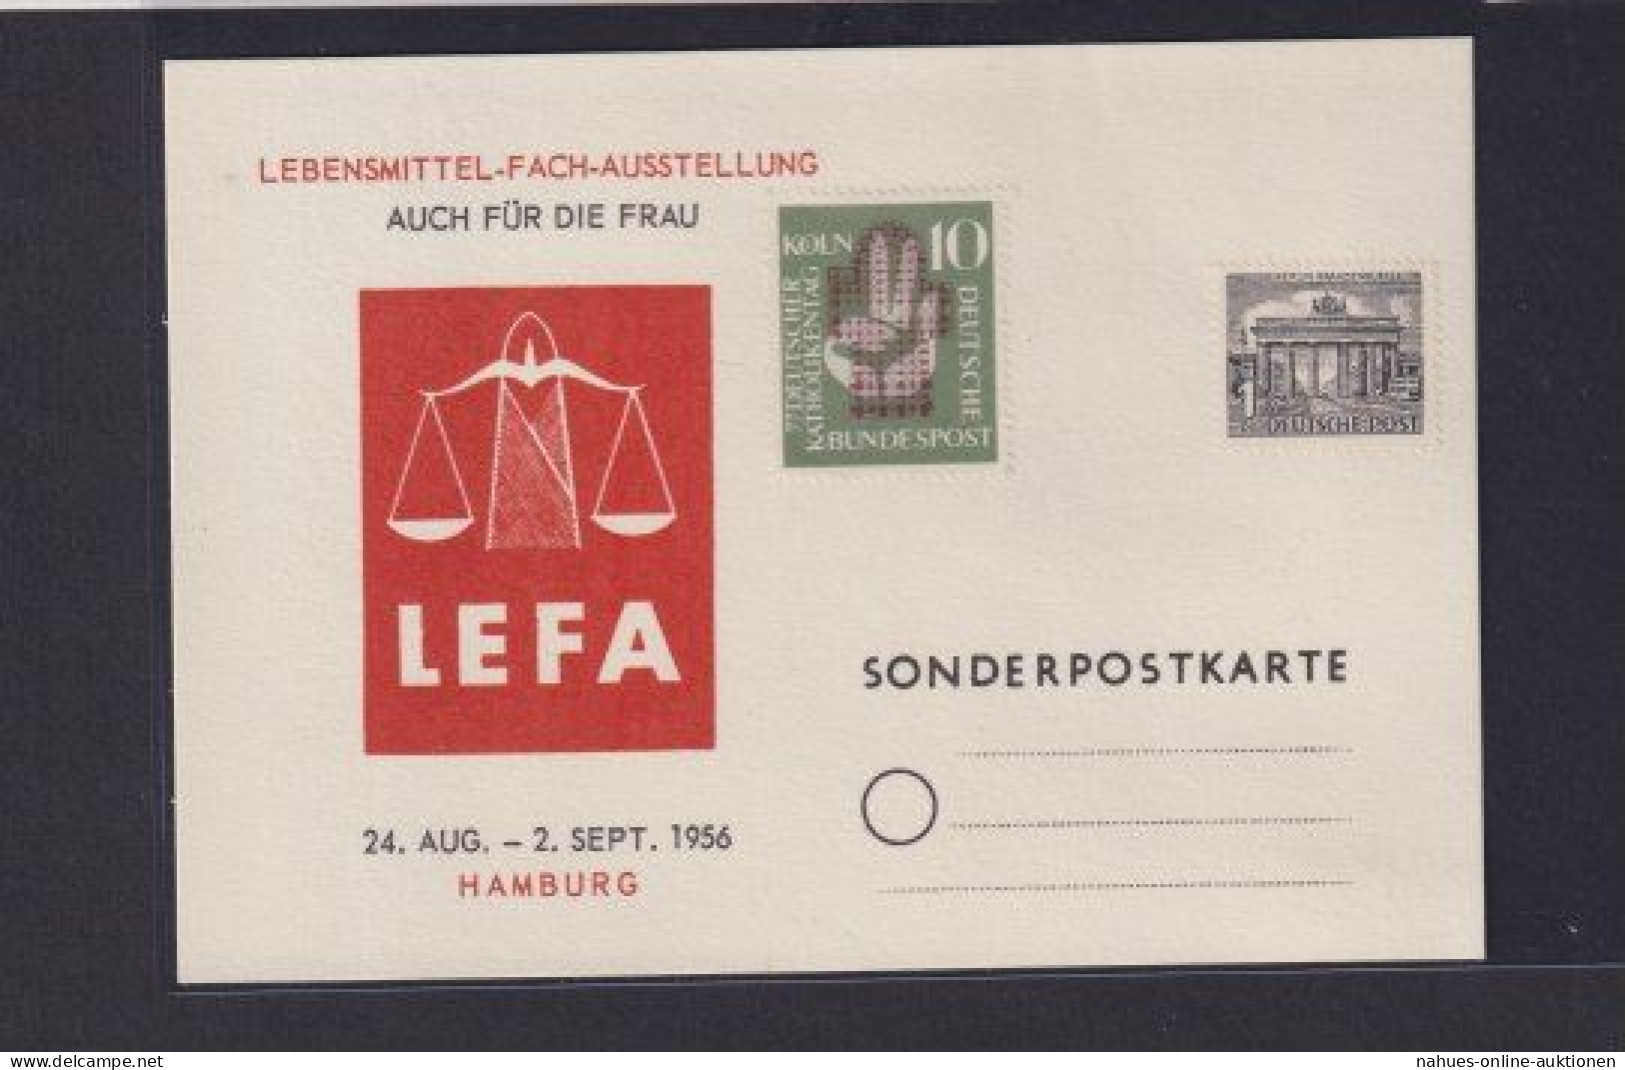 Bund Sonderkarte Hamburg Lebensmittel Fach Ausstellung LEFA 1956 - Covers & Documents